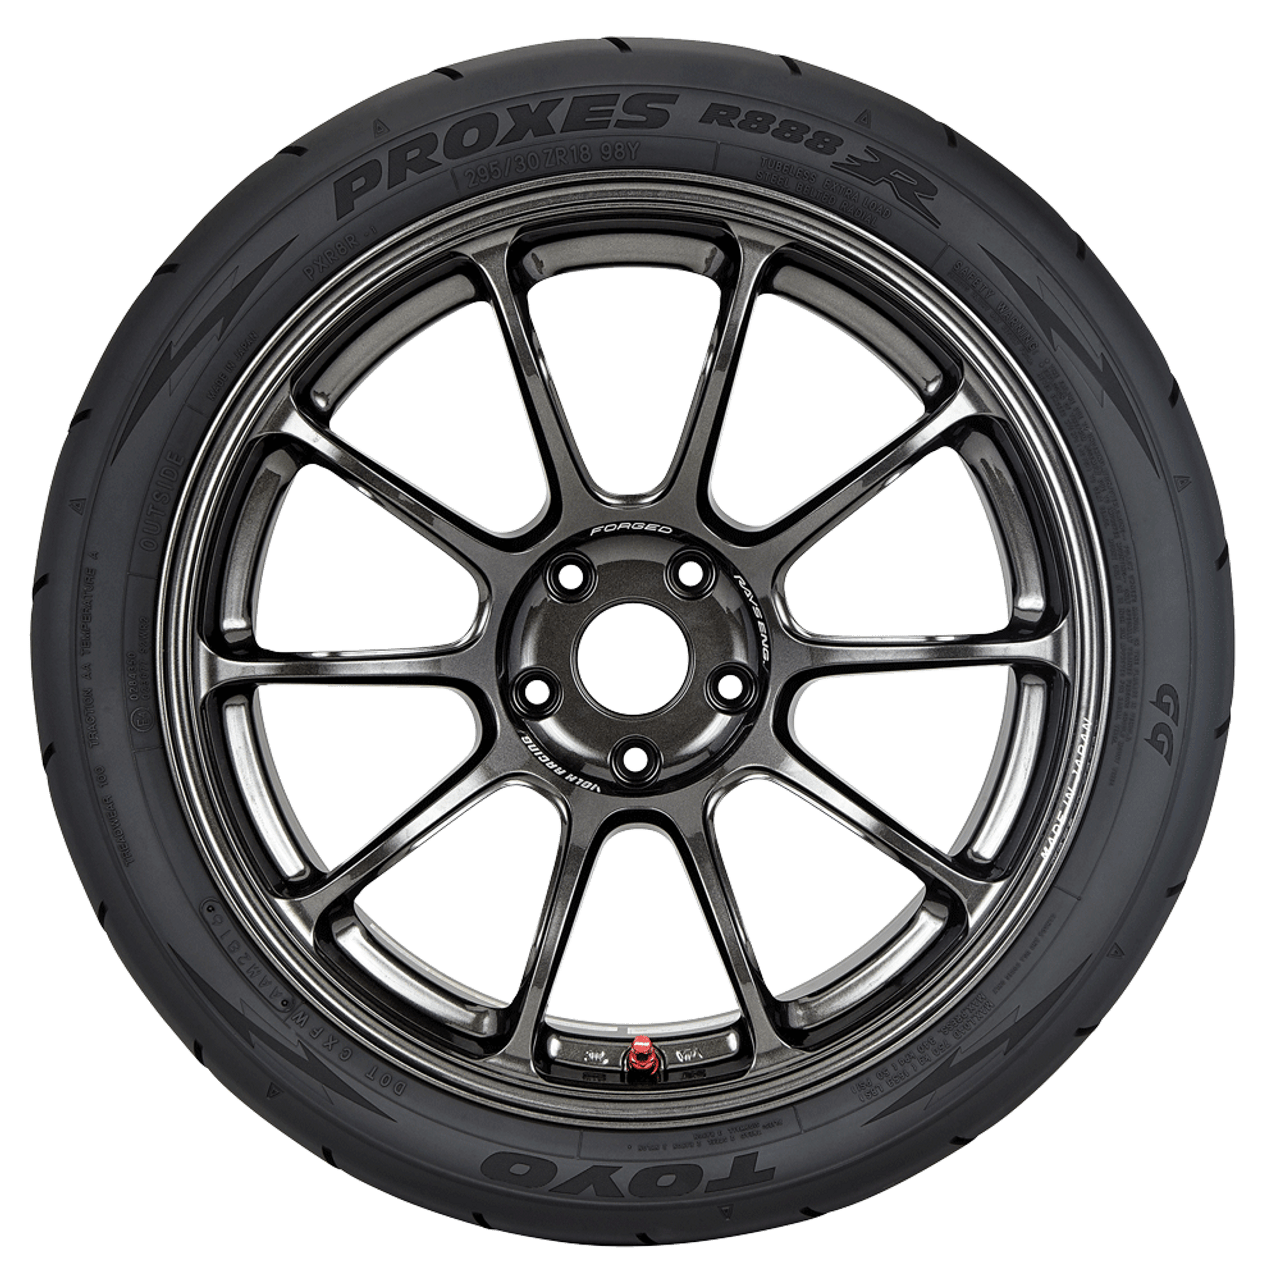 Toyo R888R - The Ultimate Track Tire